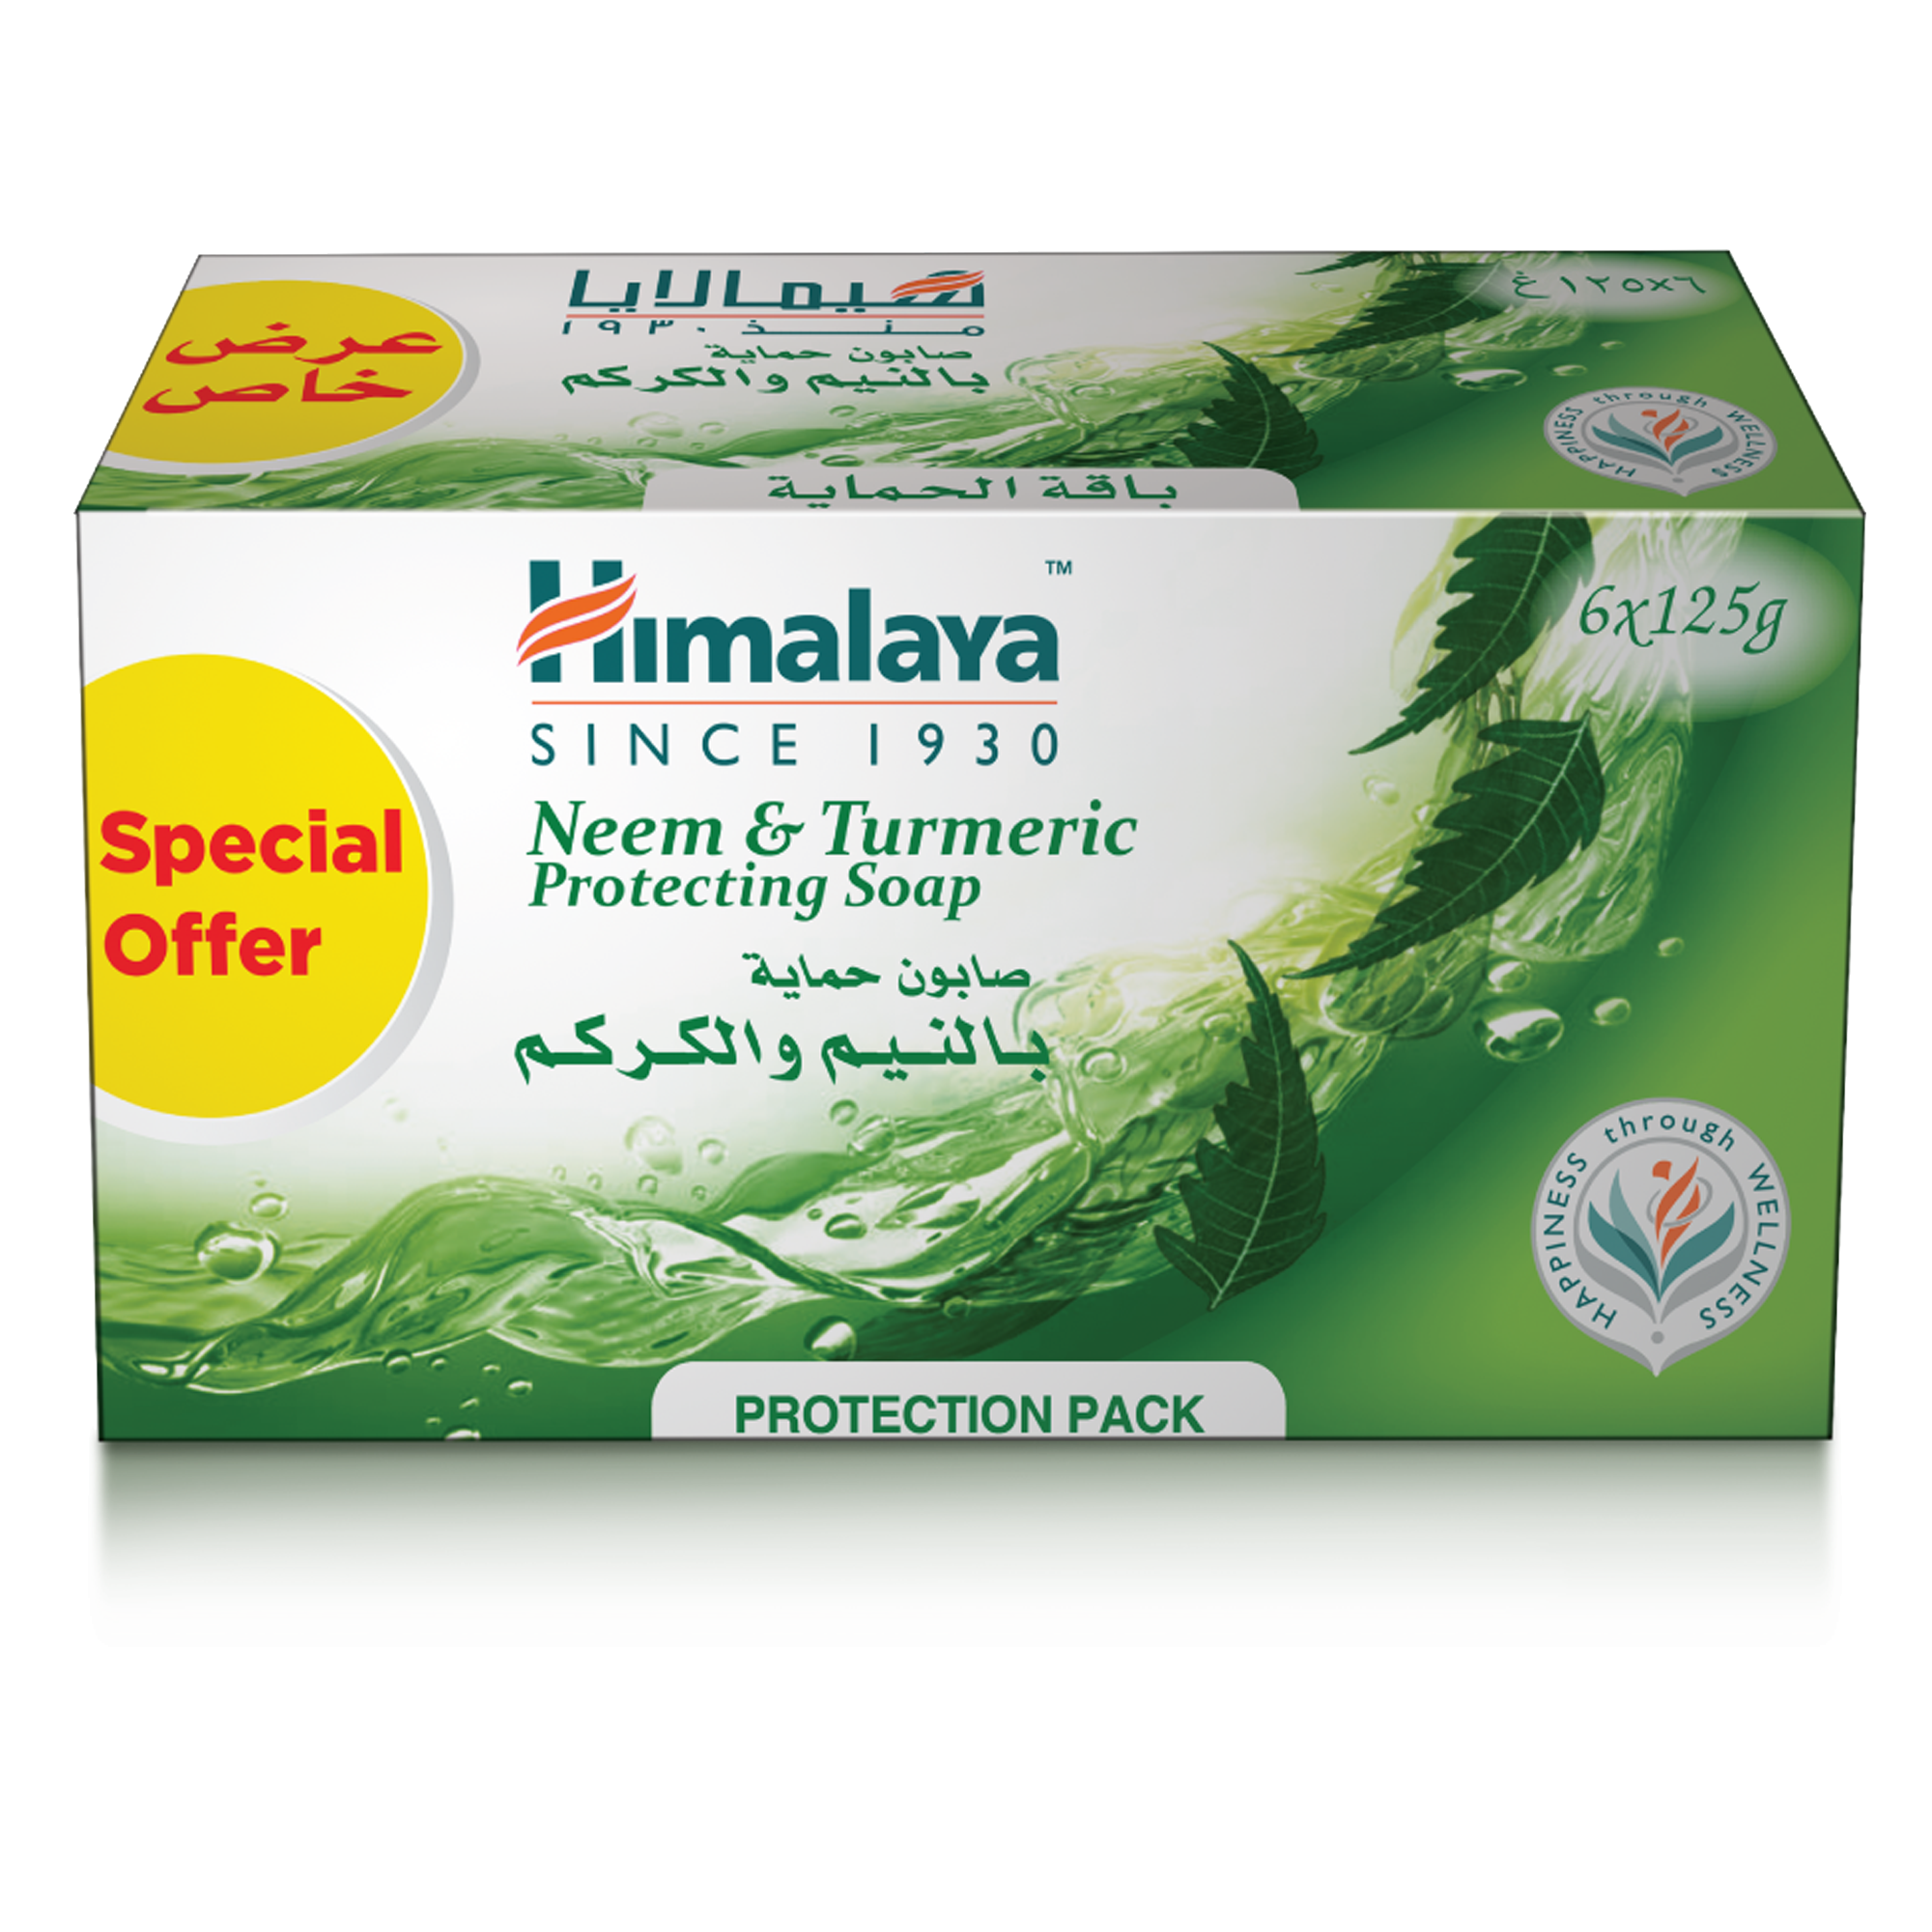 Himalaya Neem & Turmeric Protecting Soap 6x125gm - Protects Skin